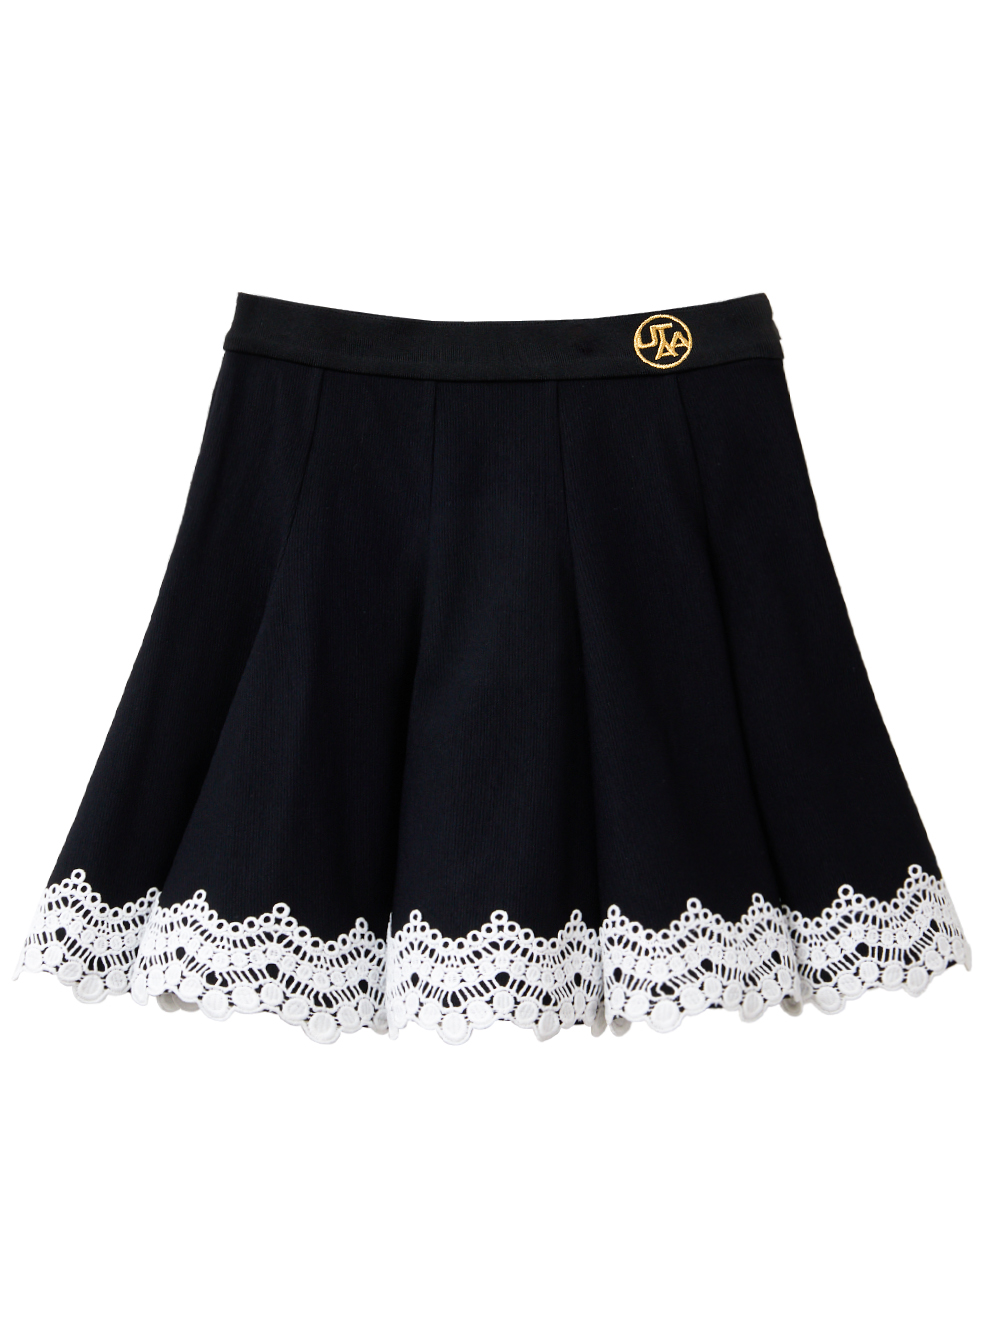 UTAA Punching Lace Flare Skirt  : Black (UC4SSF210BK)